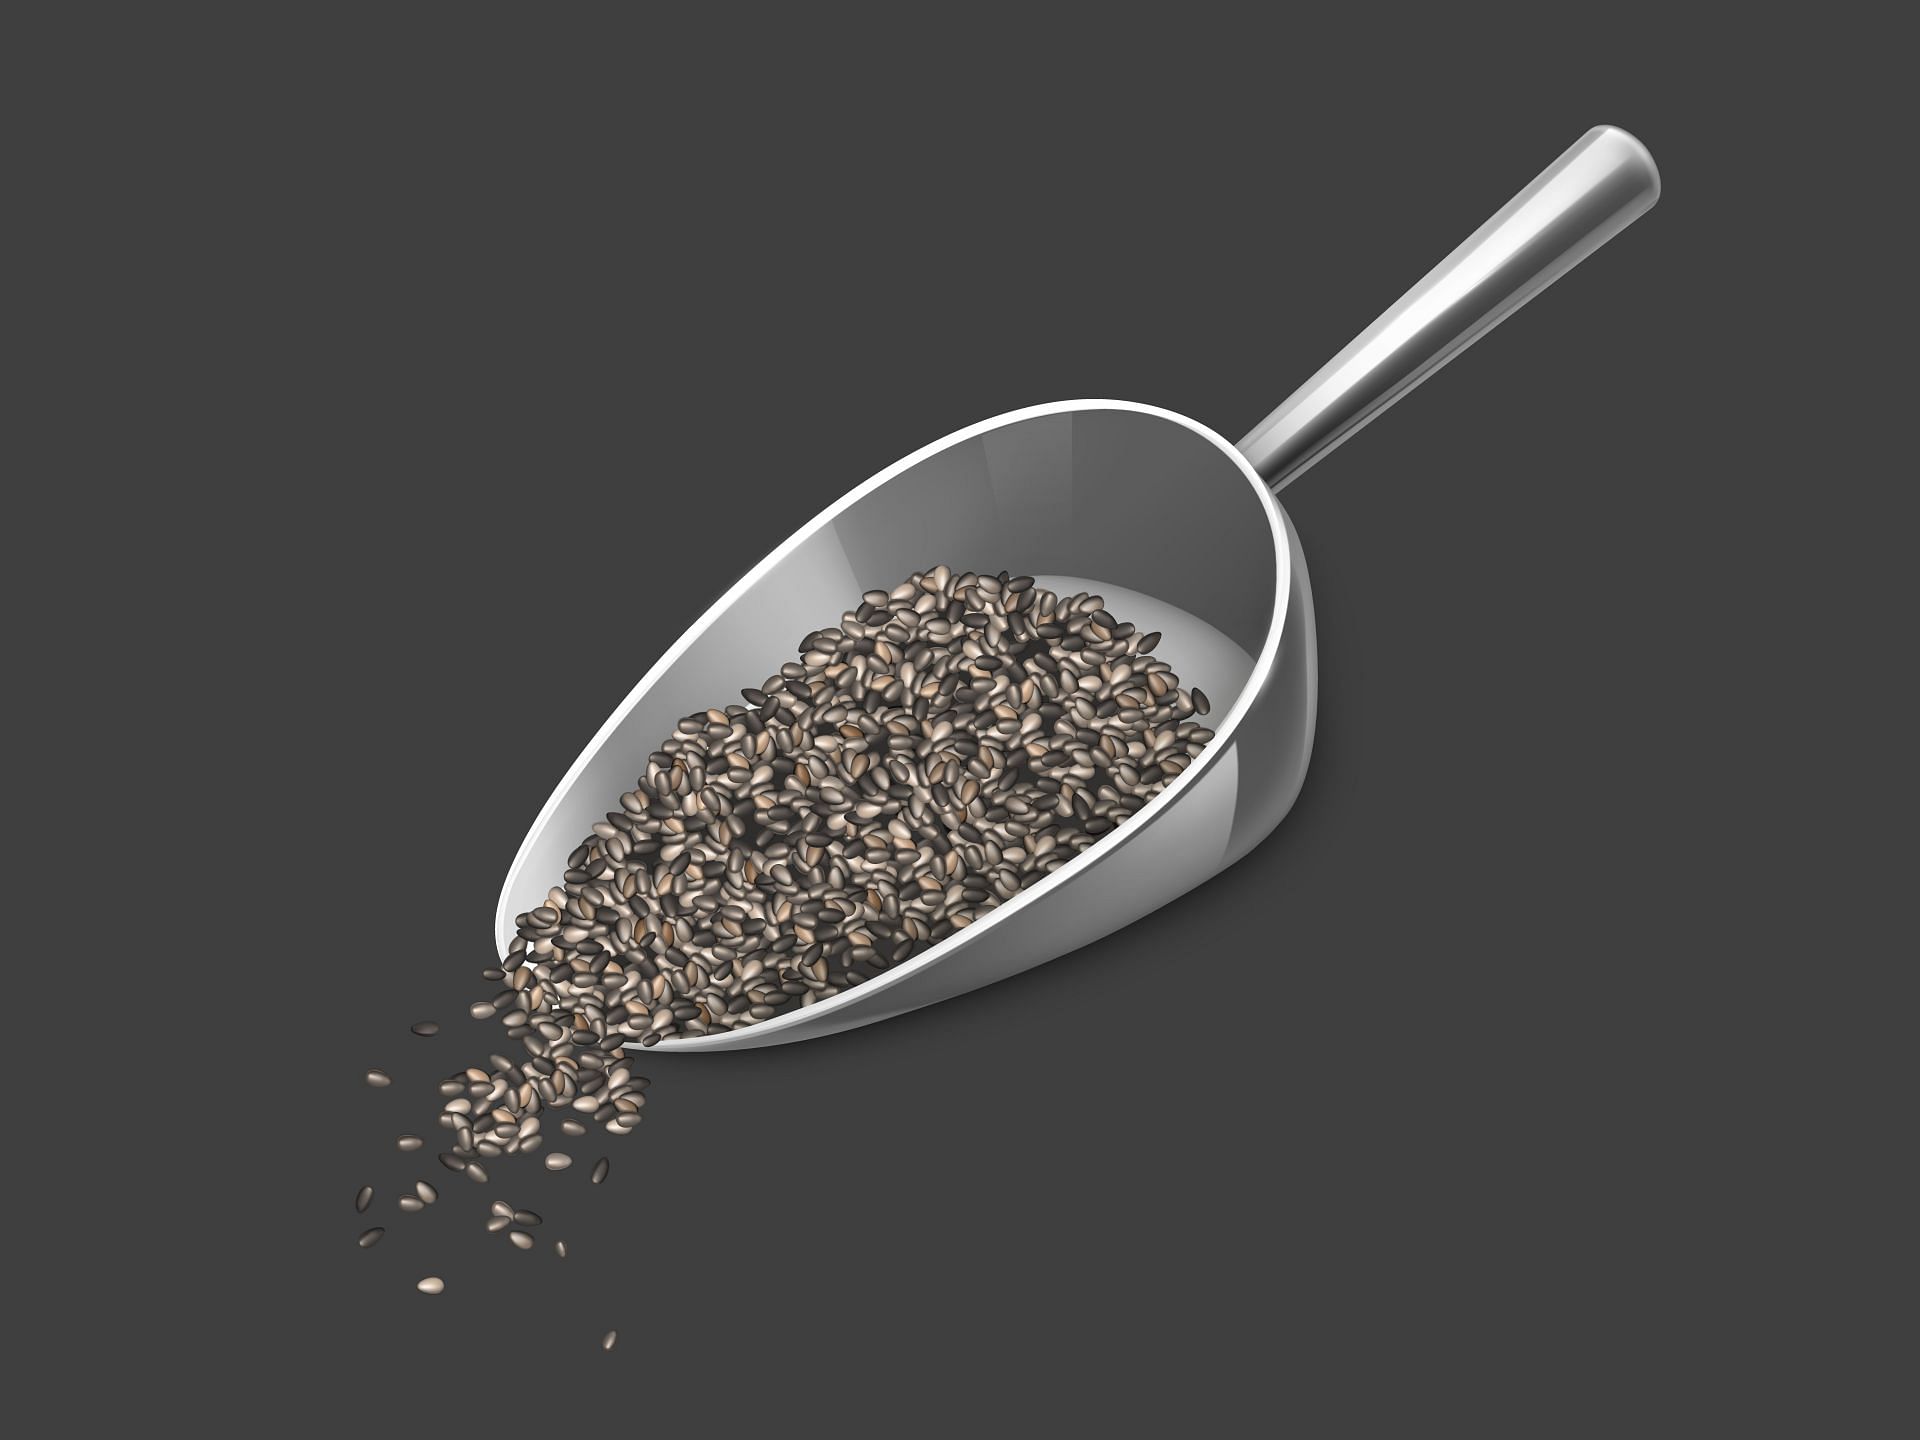 Chia seeds (Image by vectorpocket on Freepik)